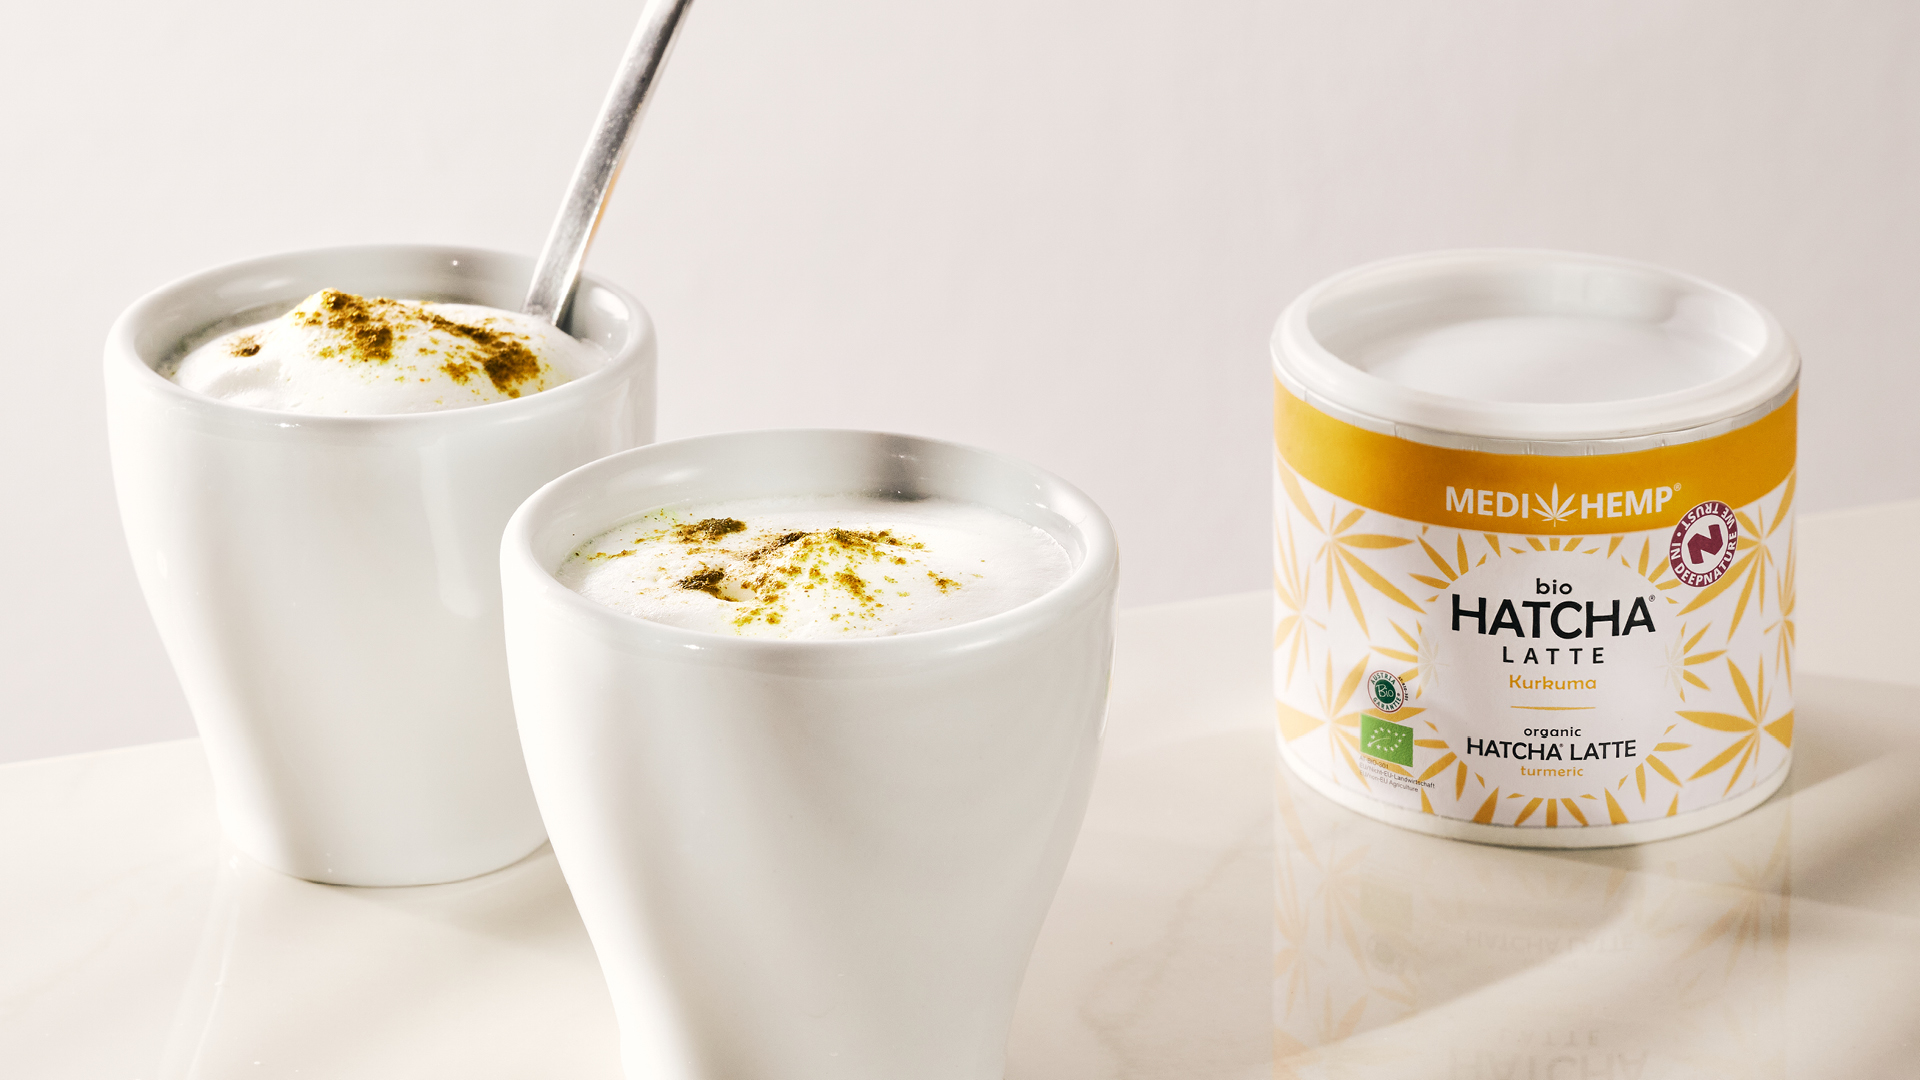 Golden milk recipe: MEDIHEMP Organic Hatcha Latte Turmeric 